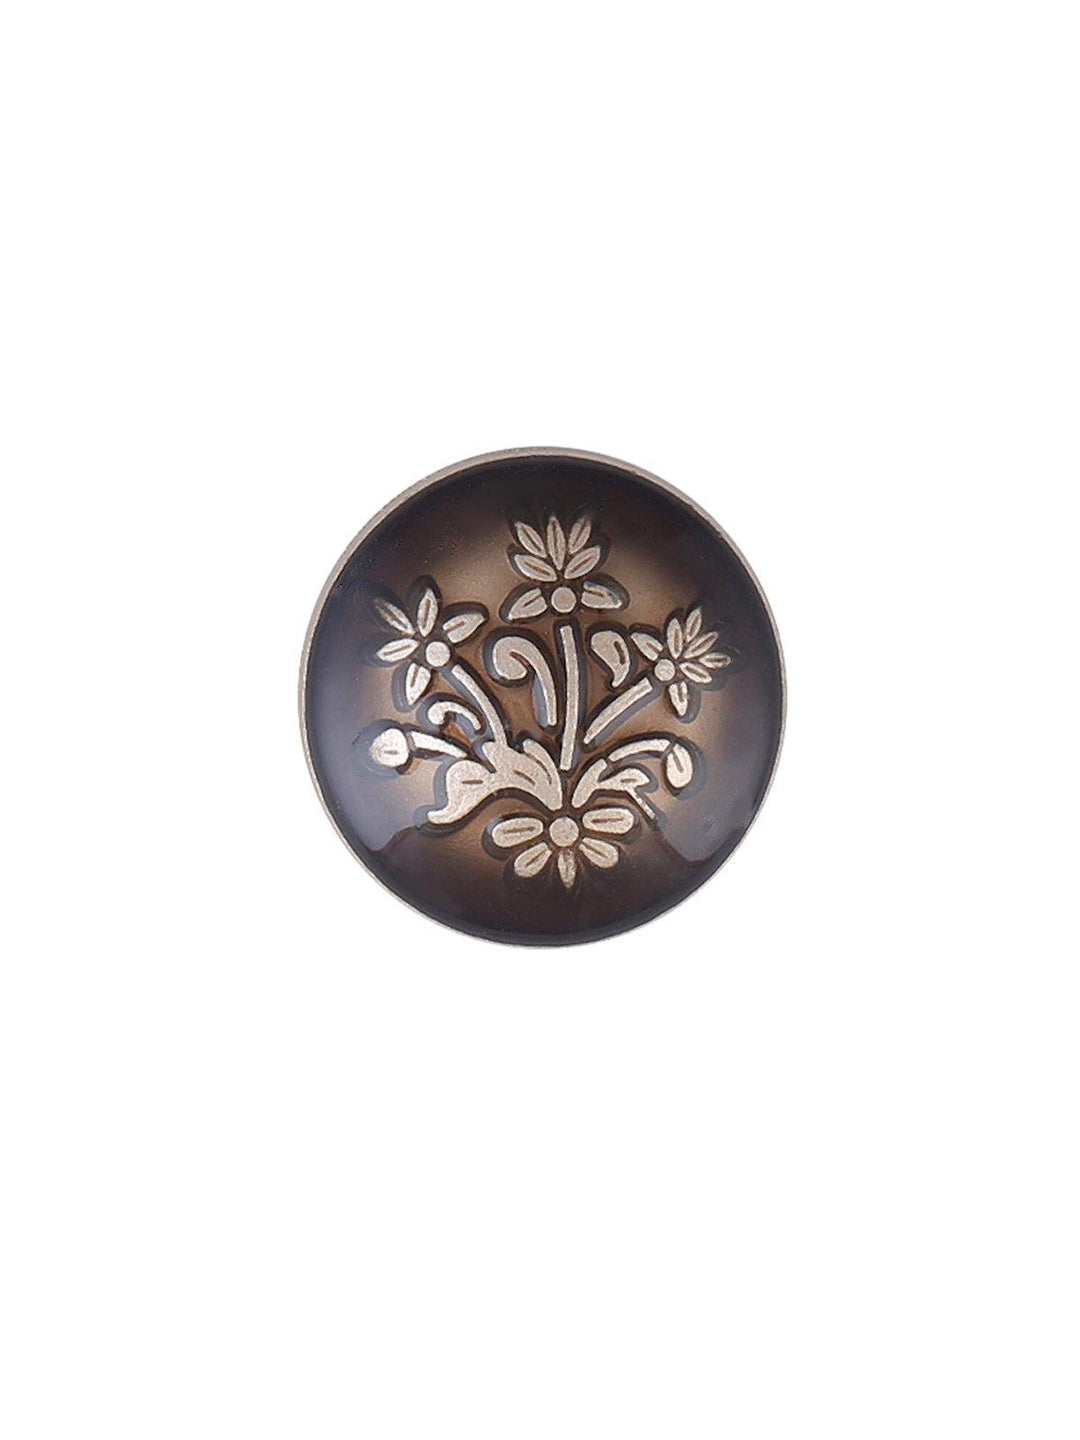 Elegant Round Shape Engraved Design Lamination Shank Metal Button in Matte Gold With Dark Brown Color